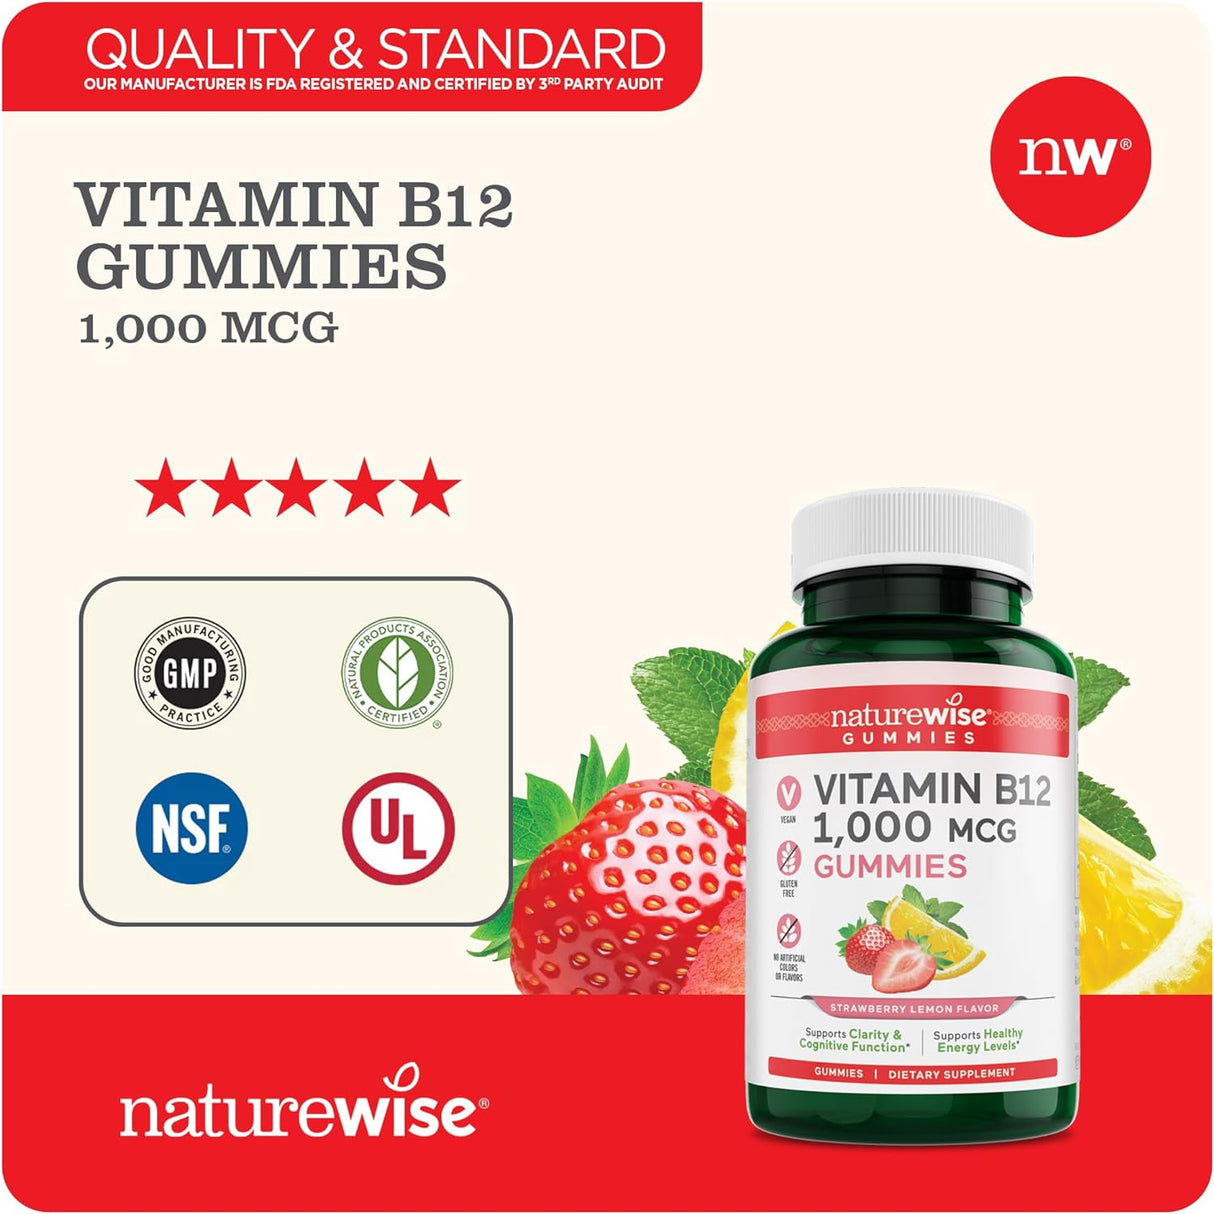 NatureWise Vitamin B12 1,000mcg trawberry Lemon Flavored Gummies 90 Gomitas